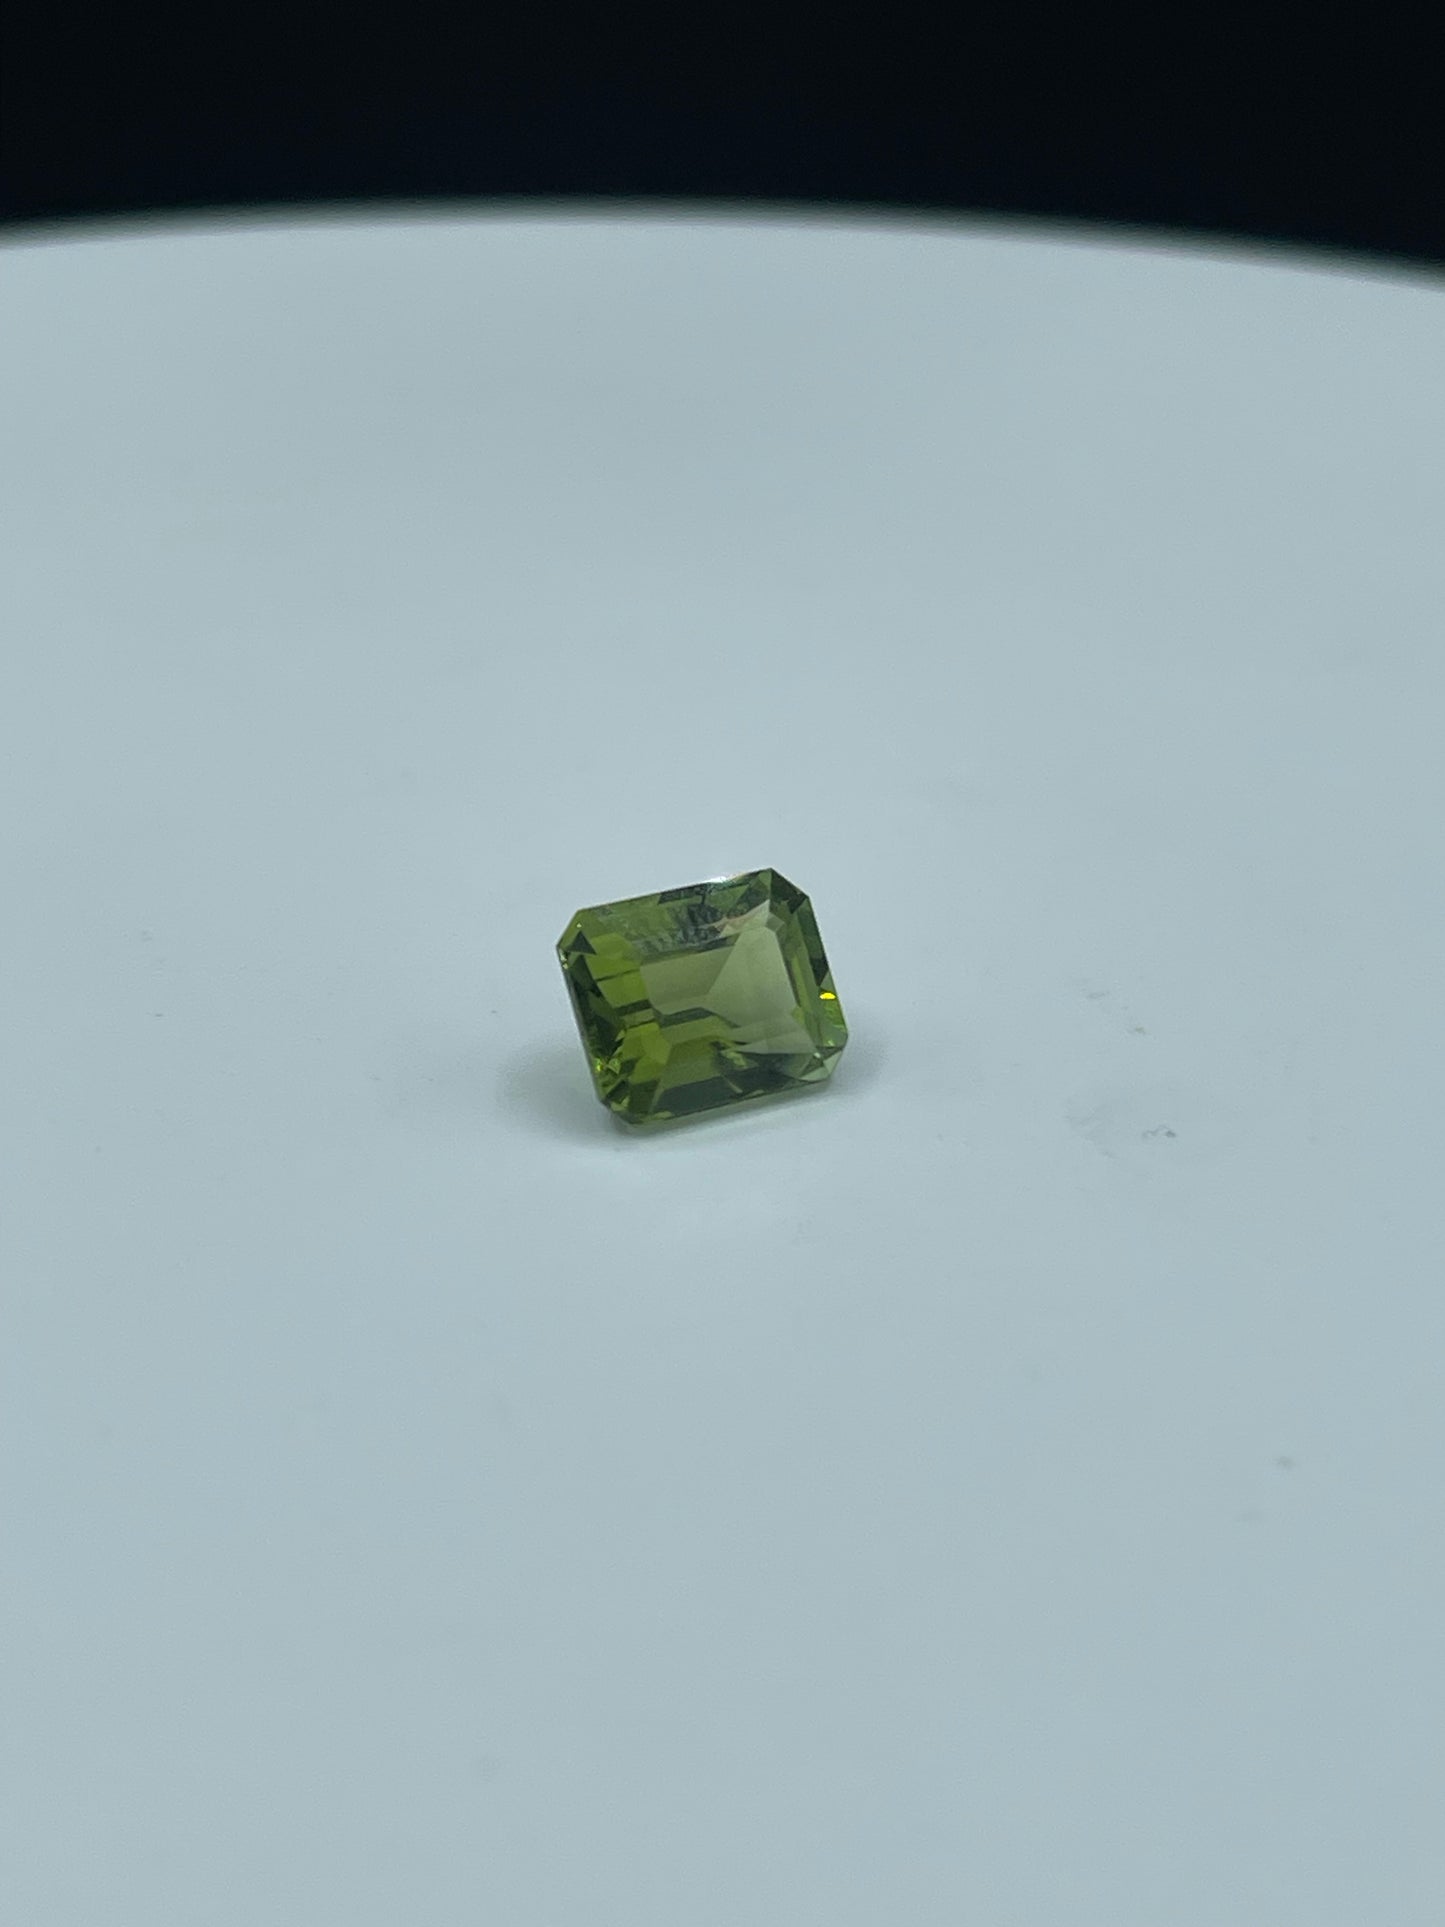 3.99 Carat Natural Green Tourmaline Emerald Cut Loose Gemstone (10.00 x 7.9 x 6.1 MM)